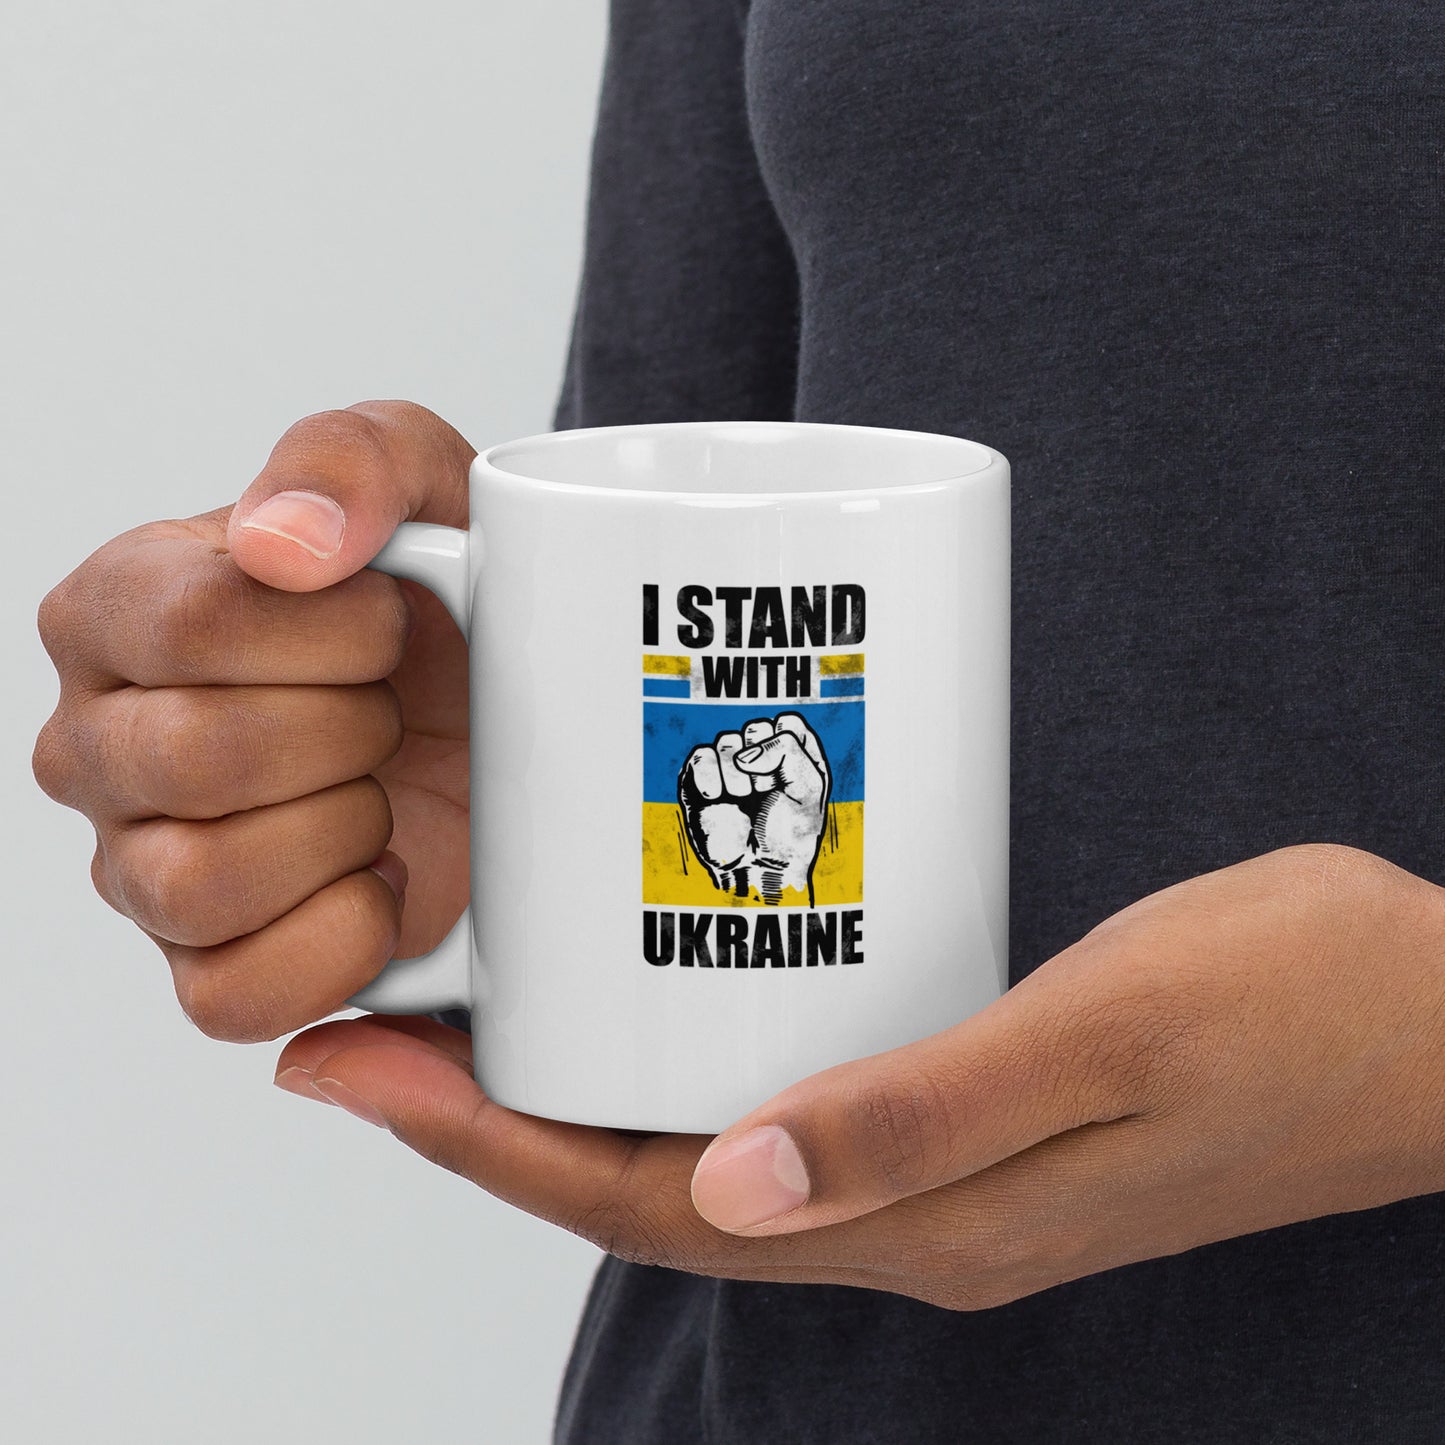 I Stand for Ukraine - White glossy mug